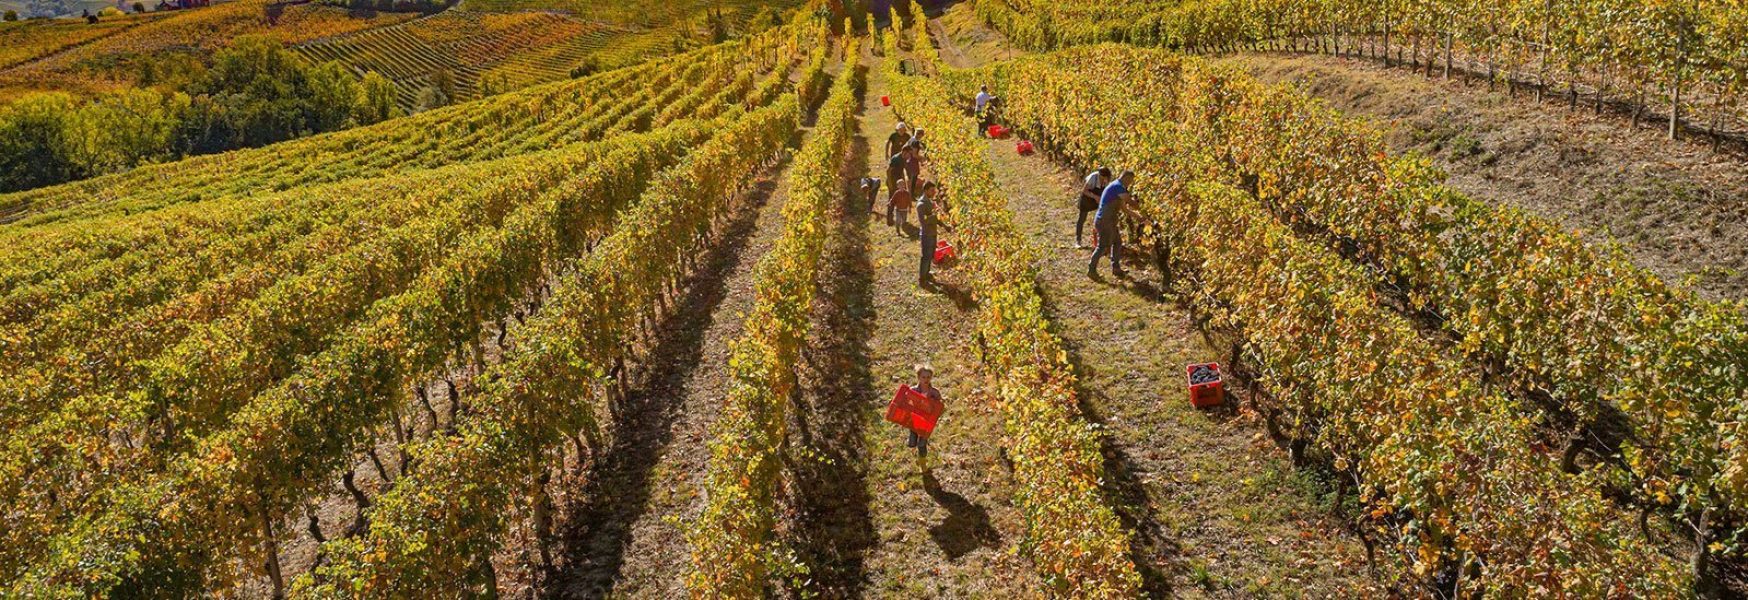 ciabot-berton-working-in-vineyard